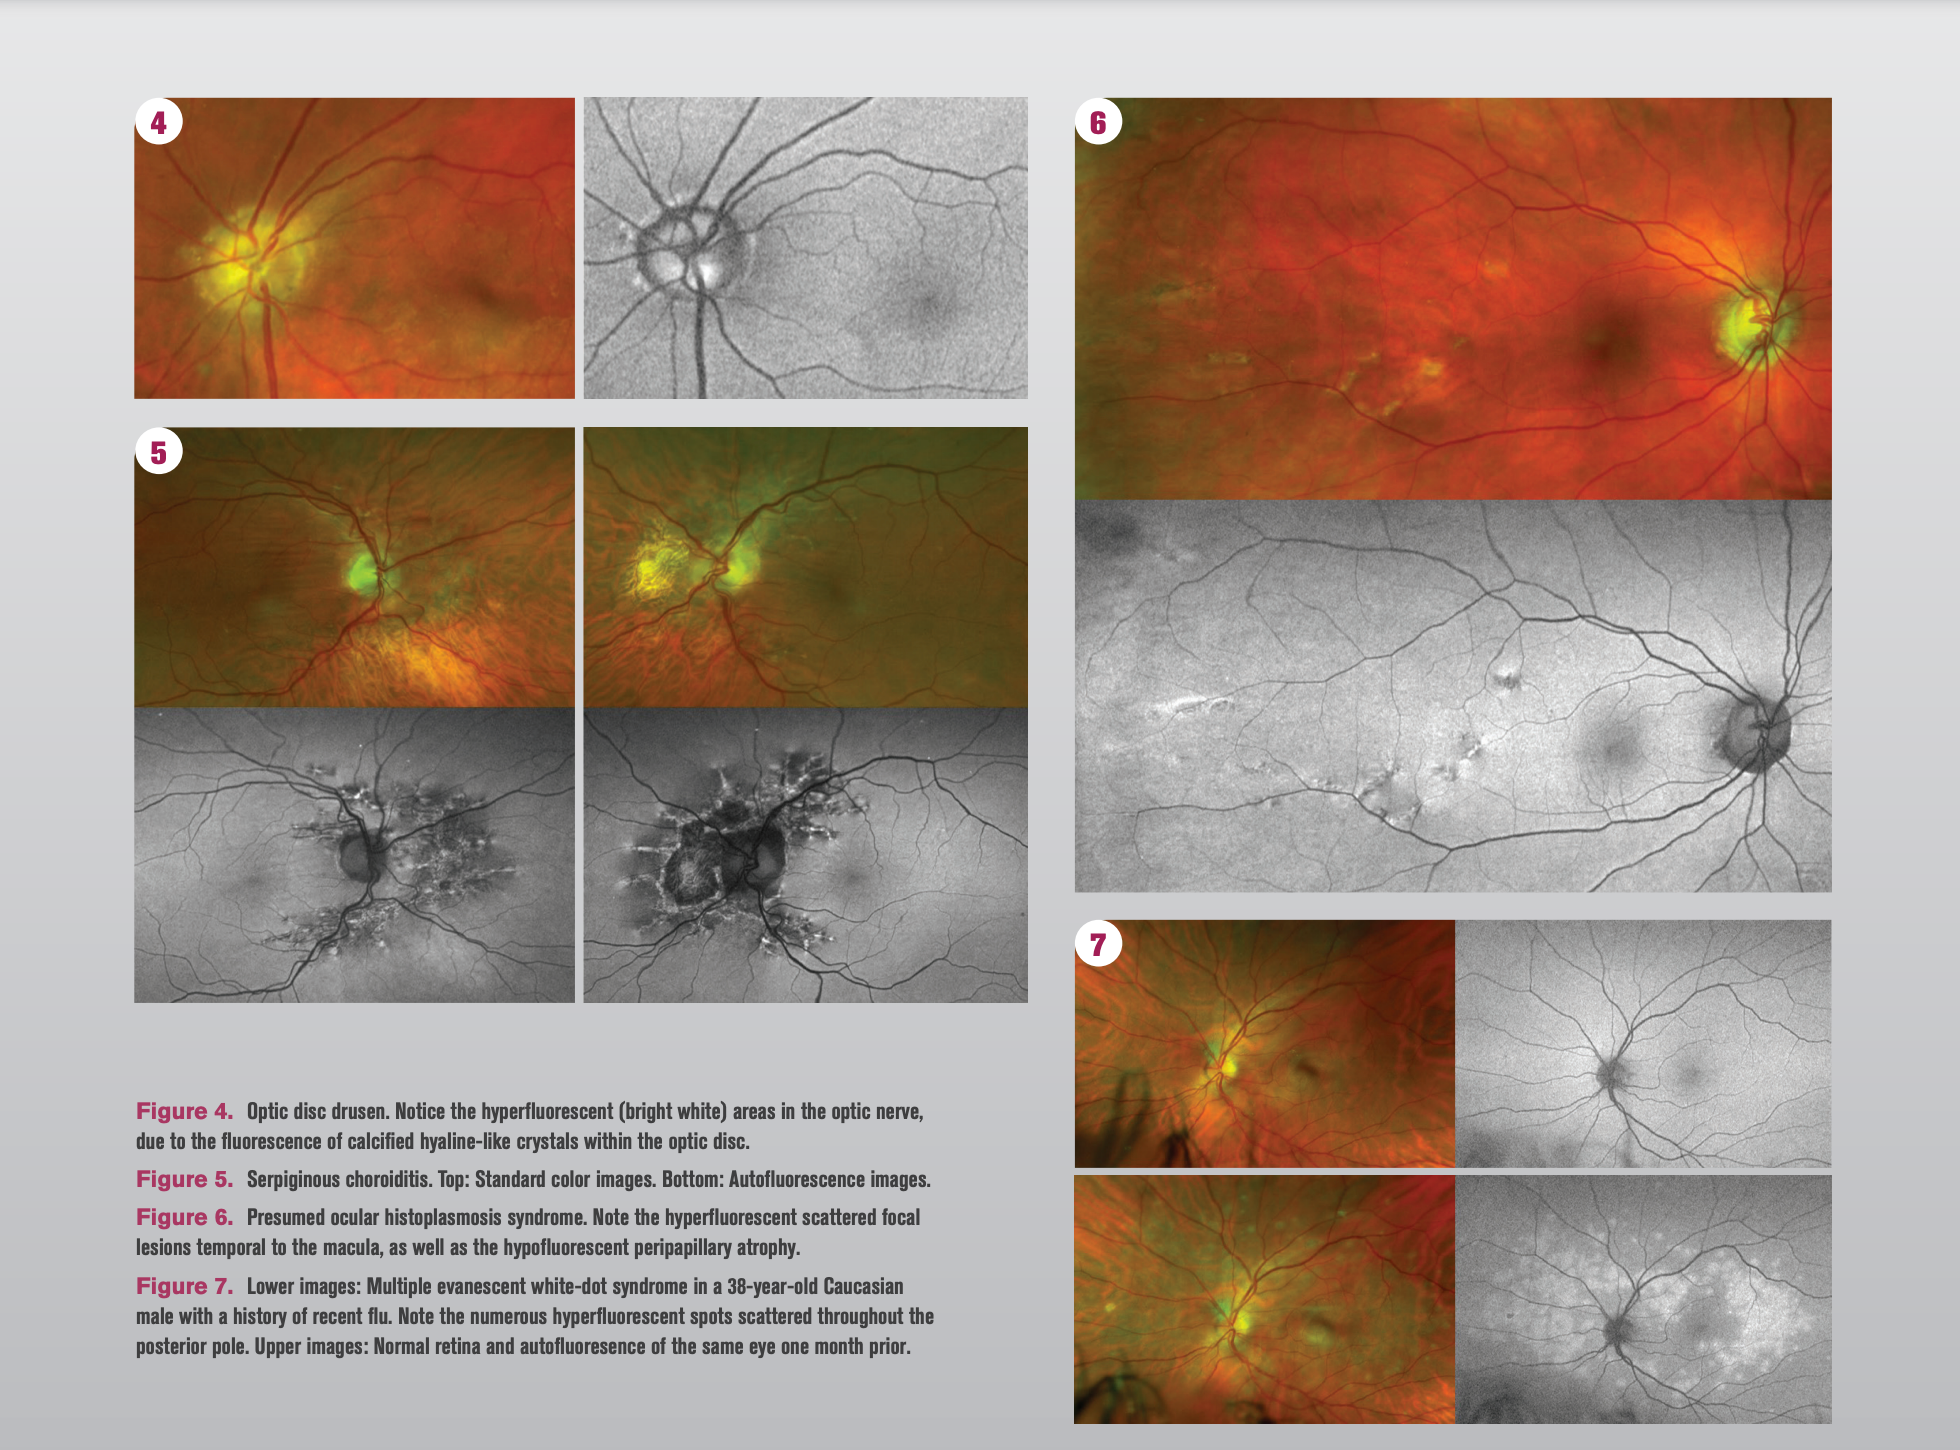 Imaging helps to identify retinal disease